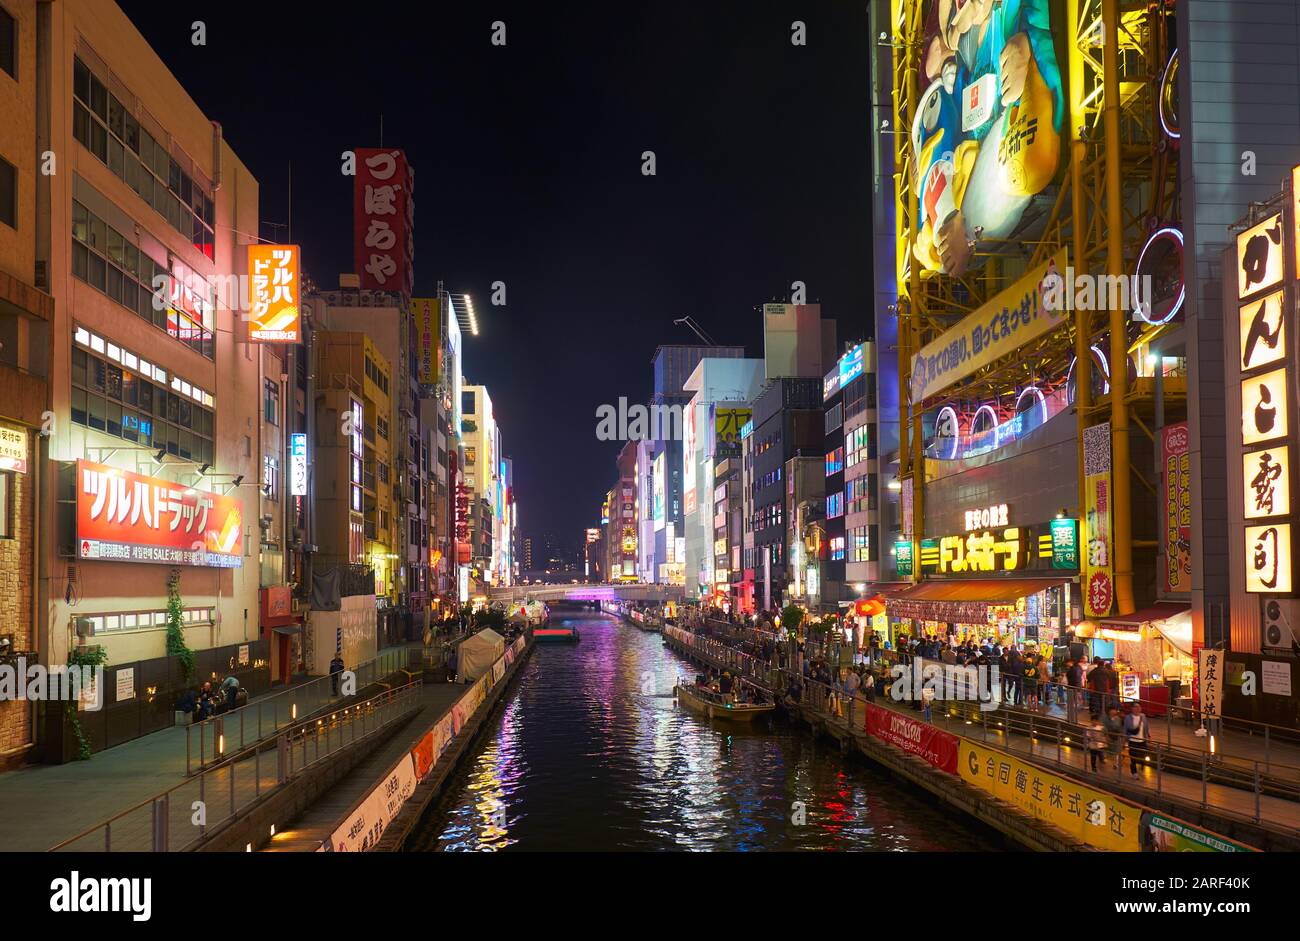 Osaka, JAPAN - 13. OKTOBER 2019: Die helle Nachtbeleuchtung über dem Dotonbori-Kanal im Namba-Viertel der Stadt Chuo ward. Osaka. Japan Stockfoto